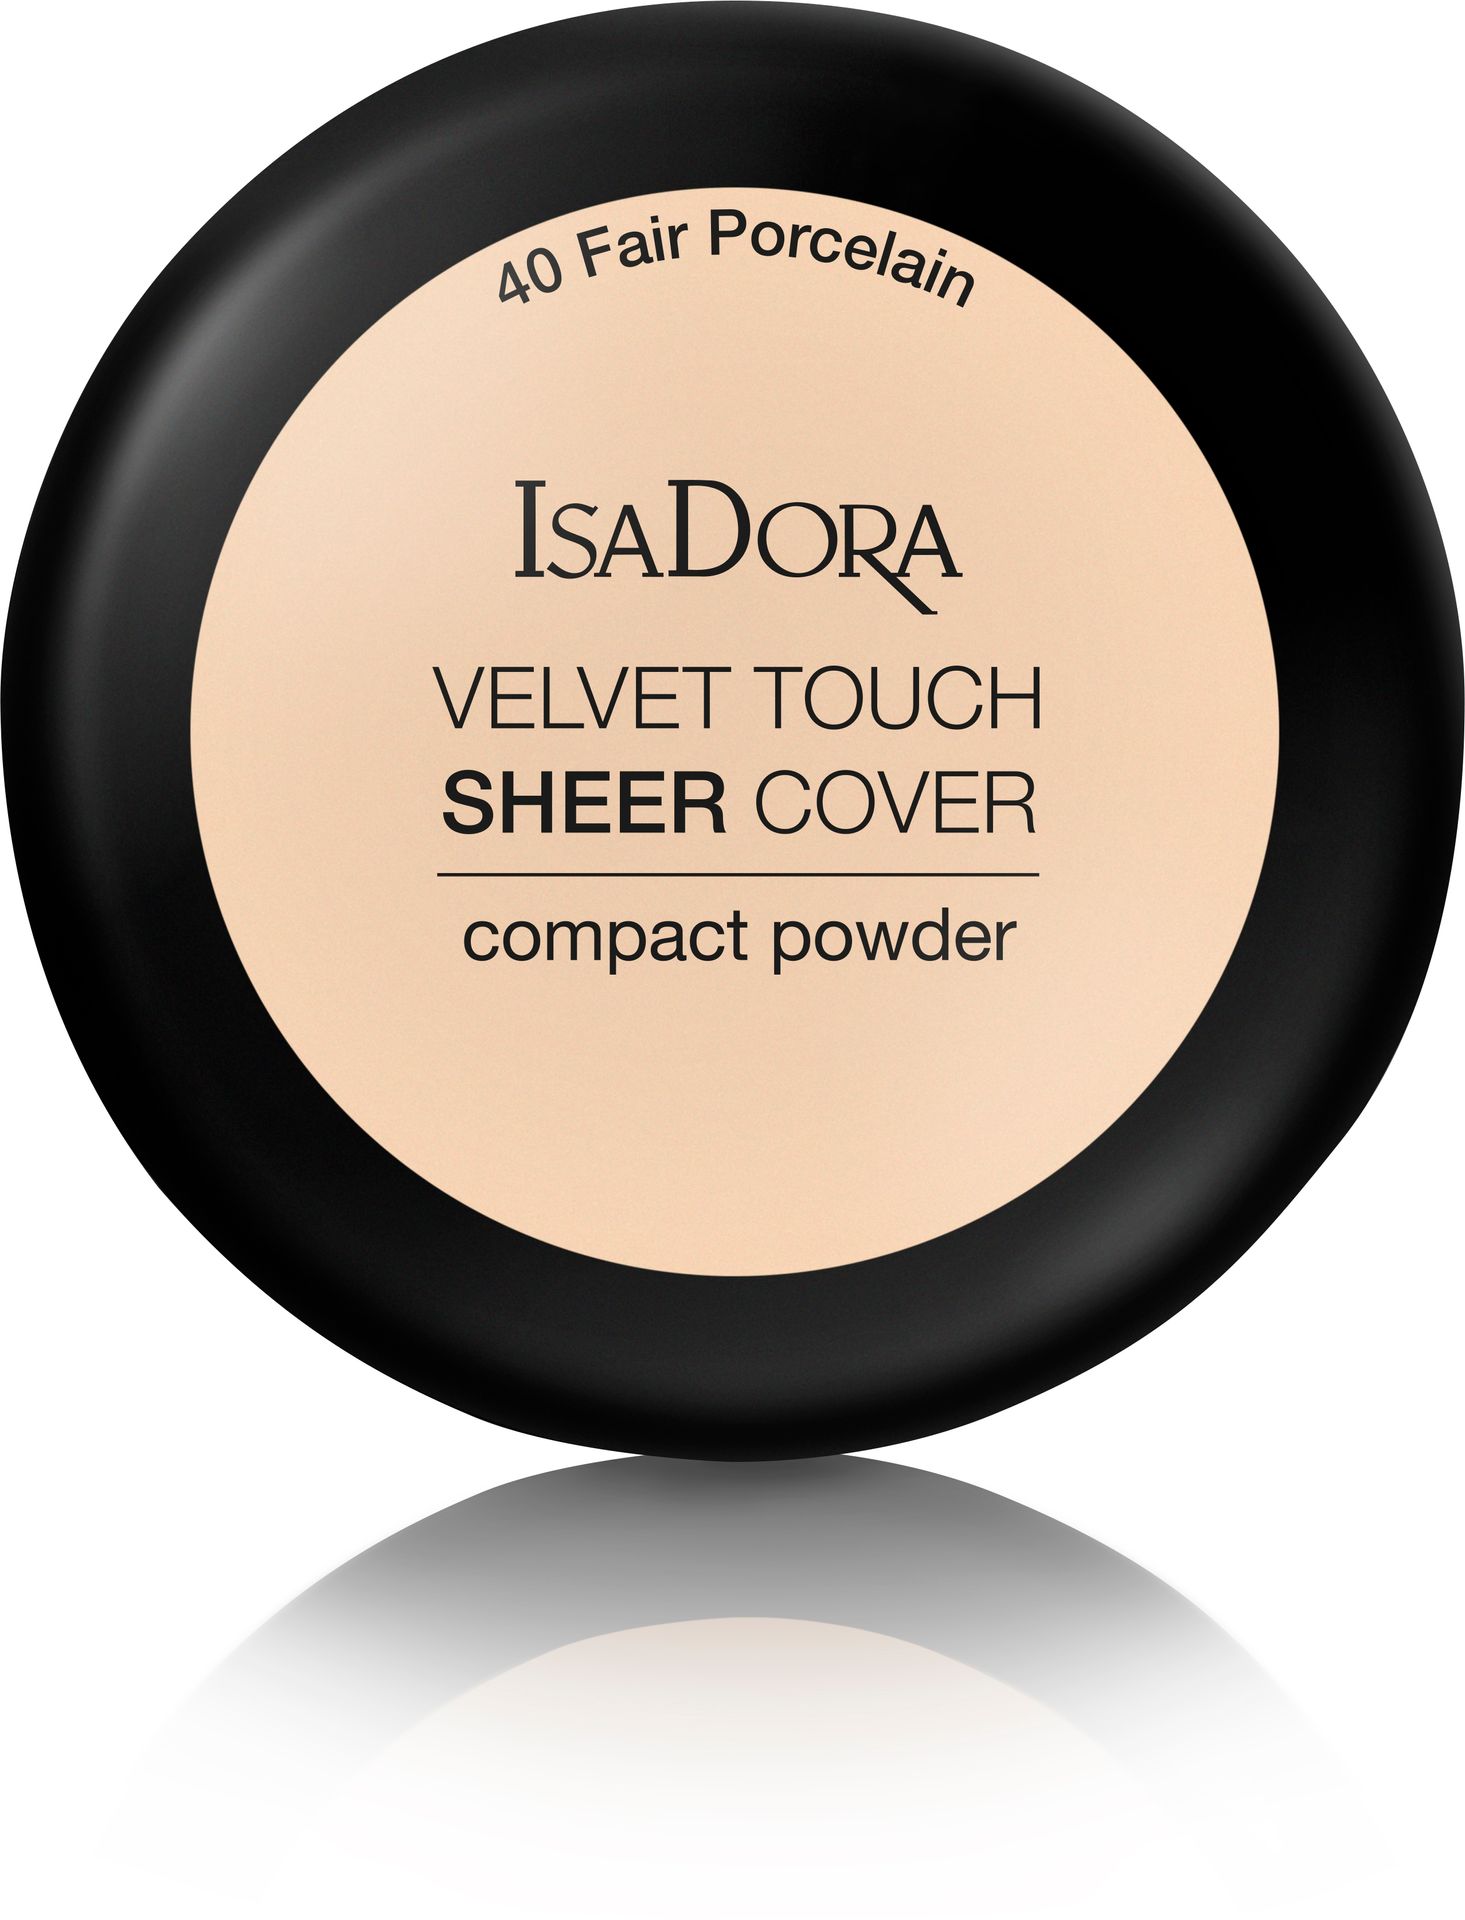 IsaDora Velvet Touch Sheer Cover Compact Powder 40 Fair Porcelain